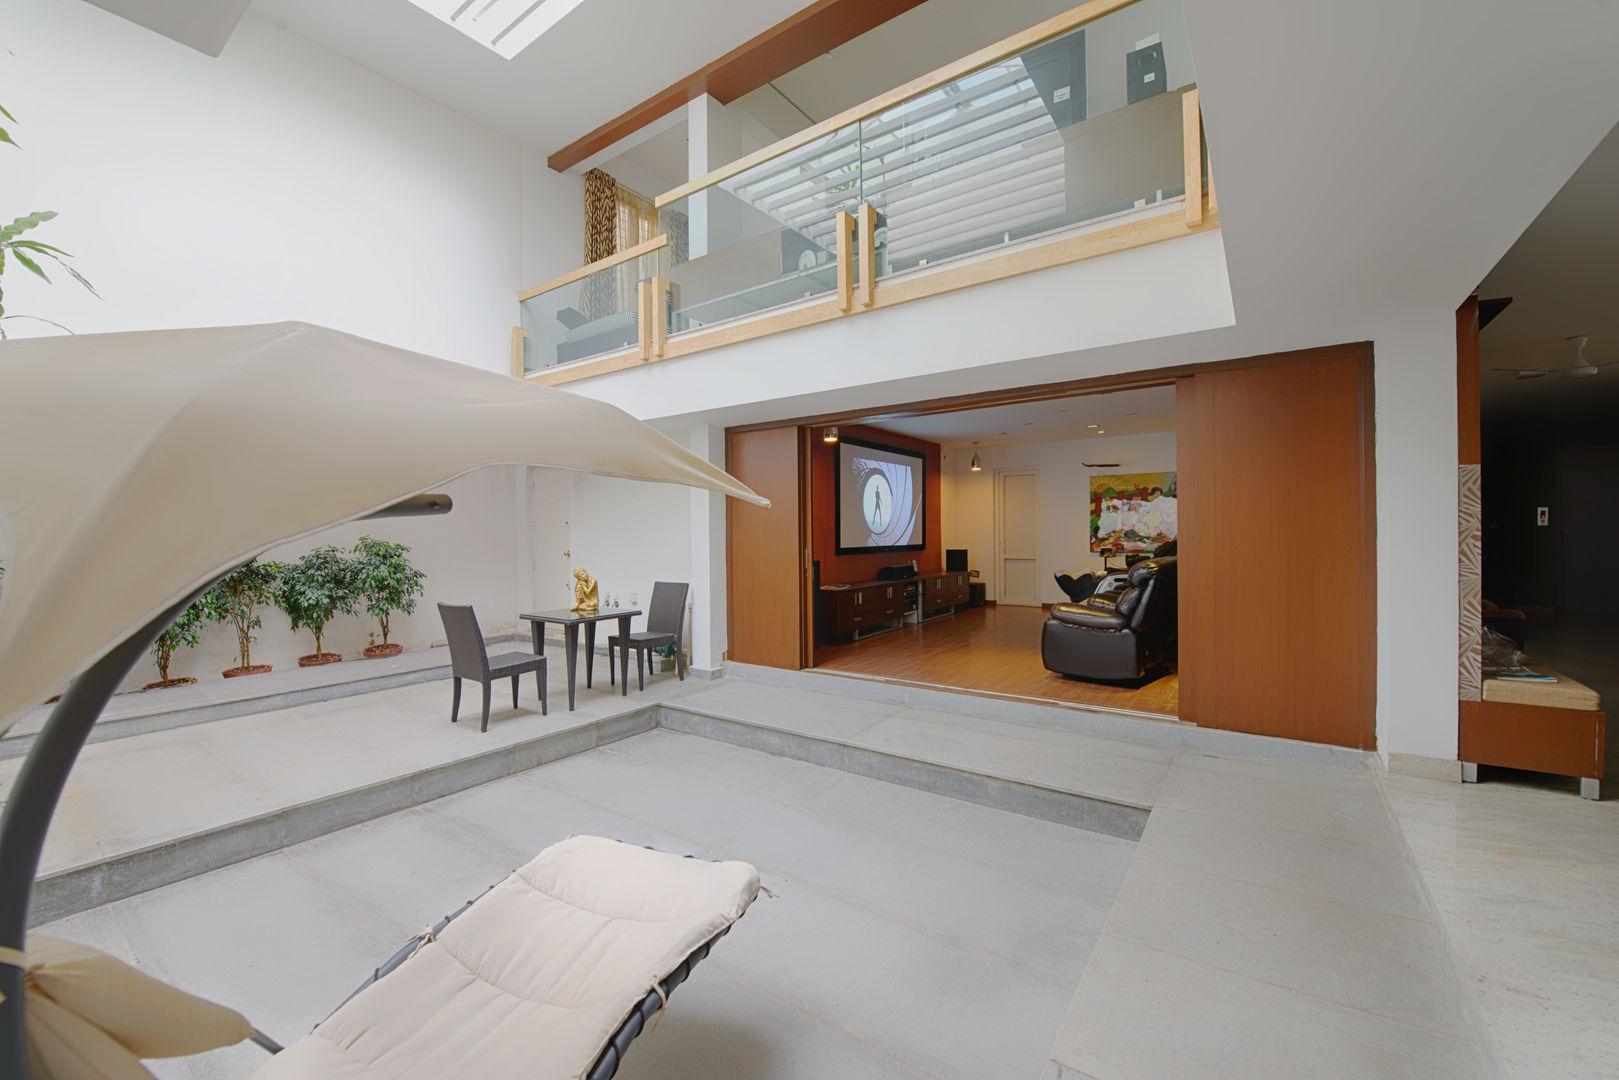 Mobius Home, Architecture Continuous Architecture Continuous ห้องนั่งเล่น